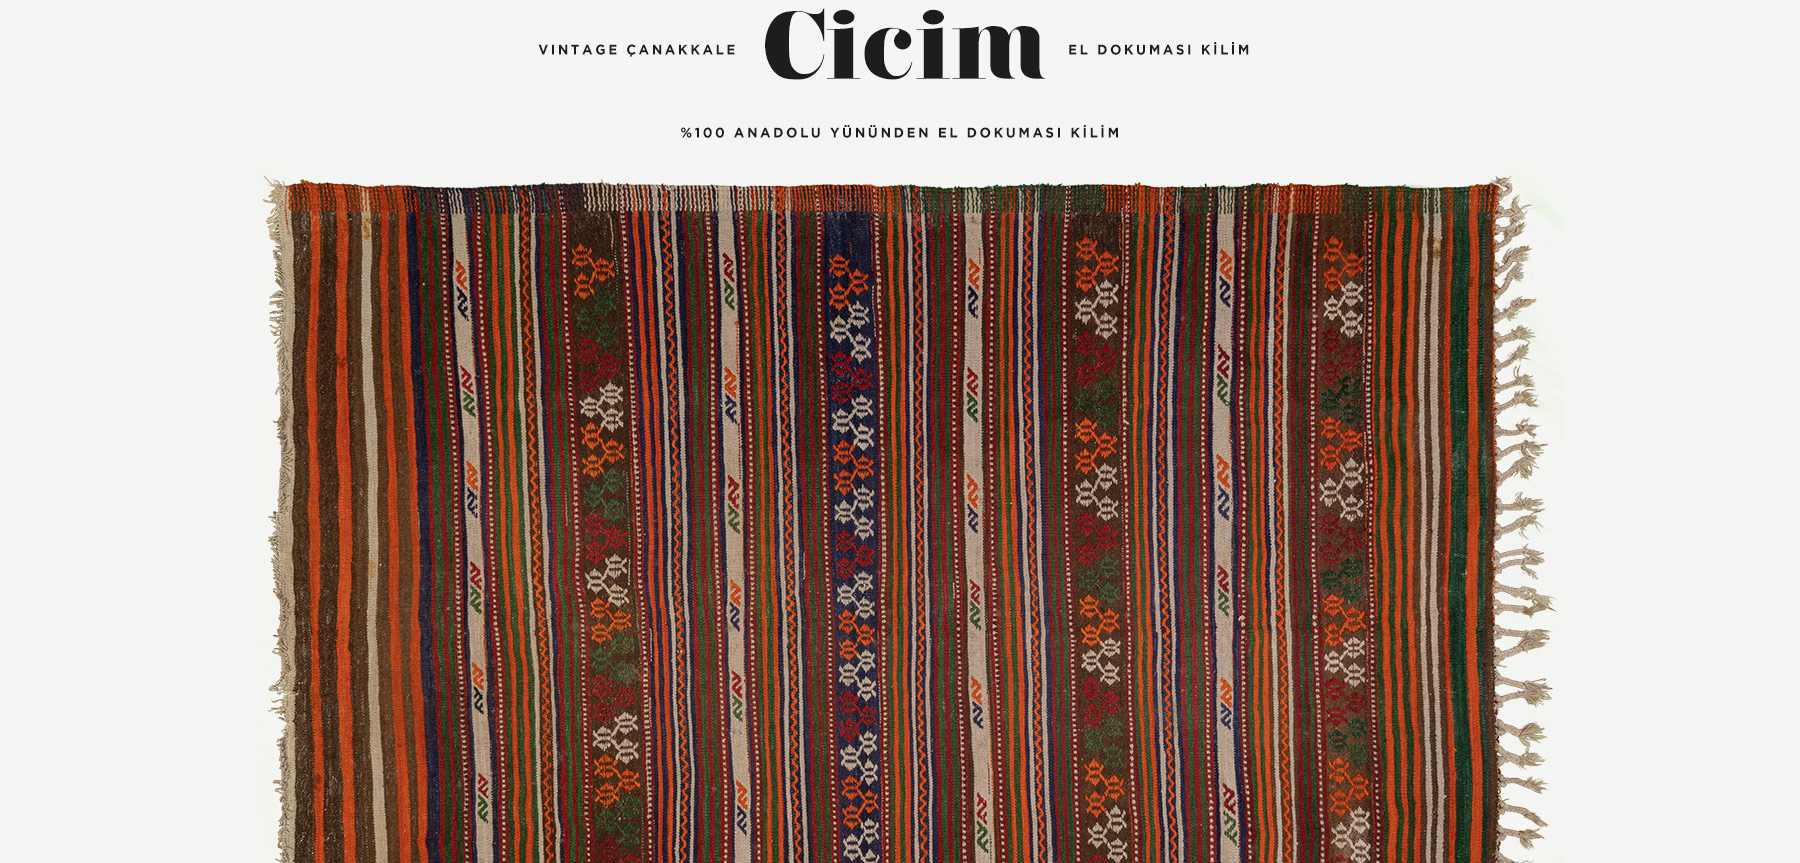 Vintage Çanakkale Cicim El Dokuması Kilim 4,66 m2'in resmi